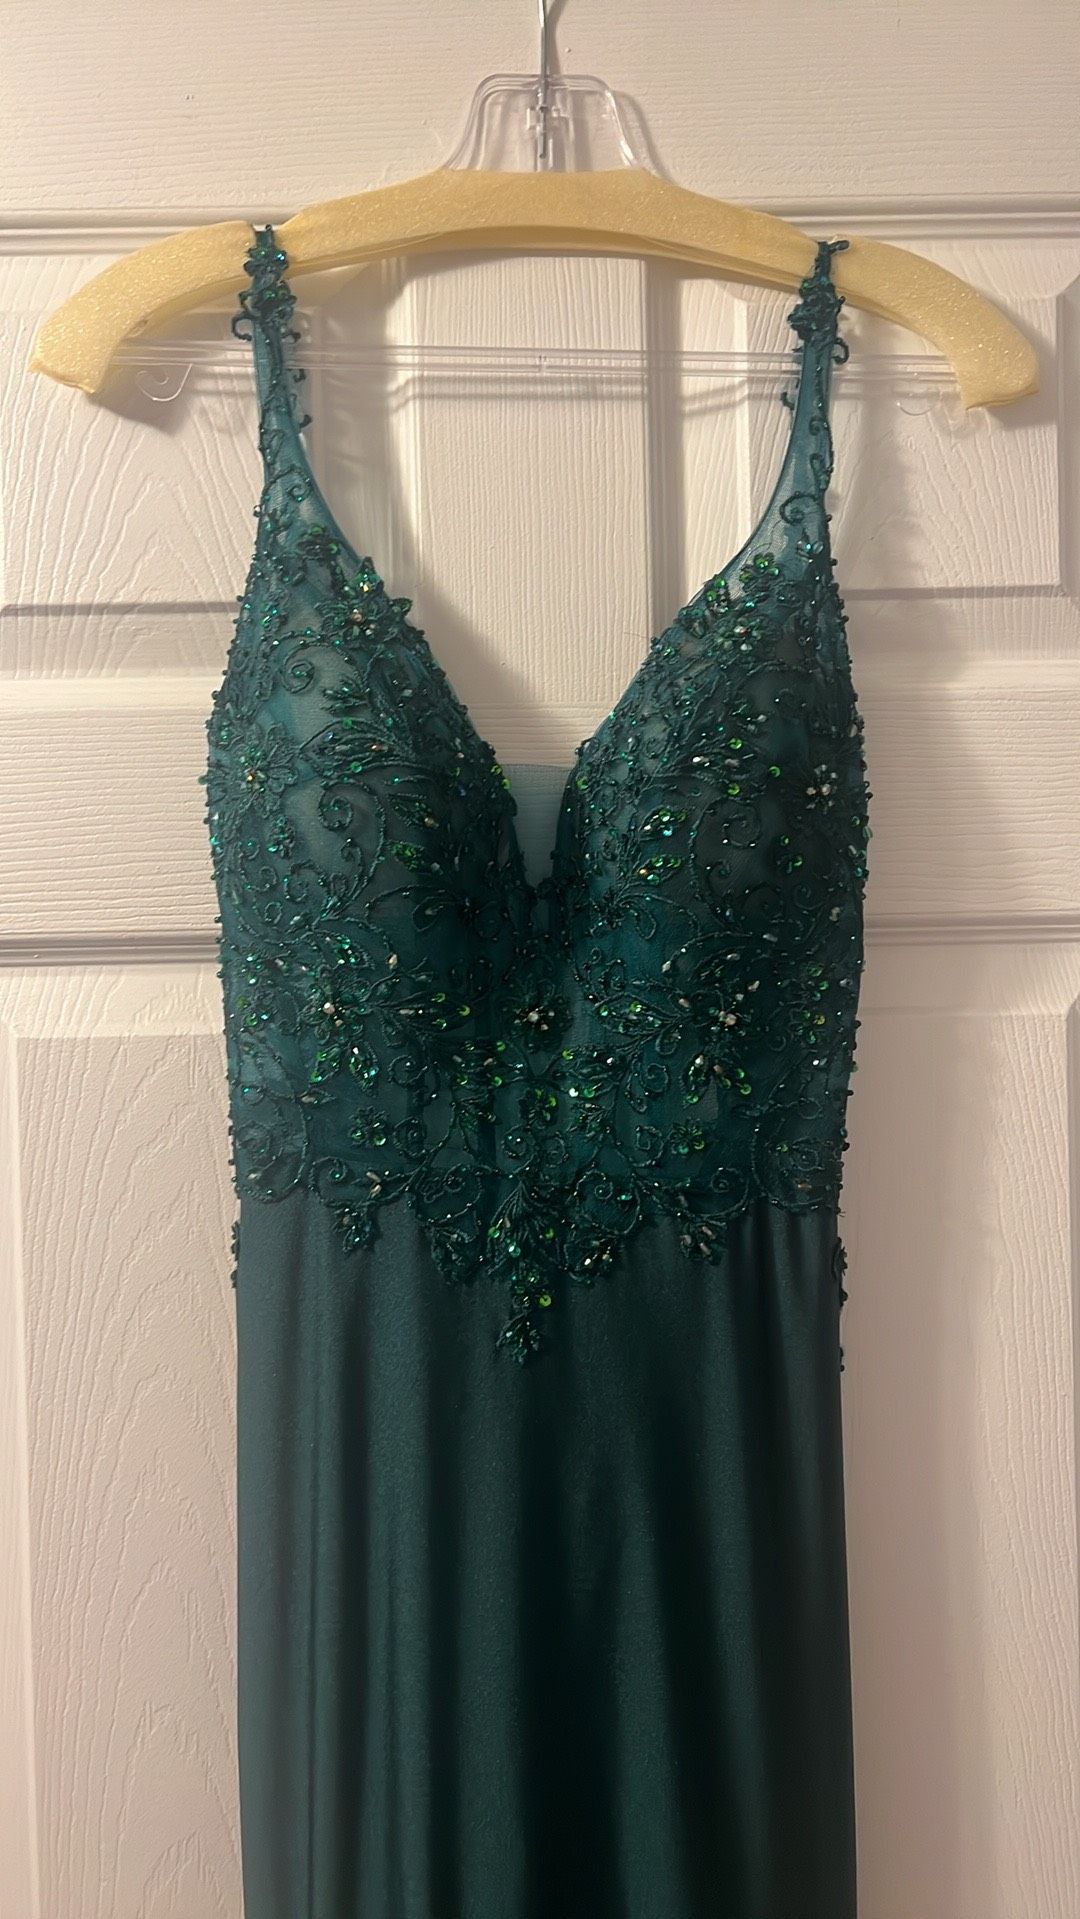 Ellie Wilde Size 2 Prom Plunge Emerald Green Mermaid Dress on Queenly